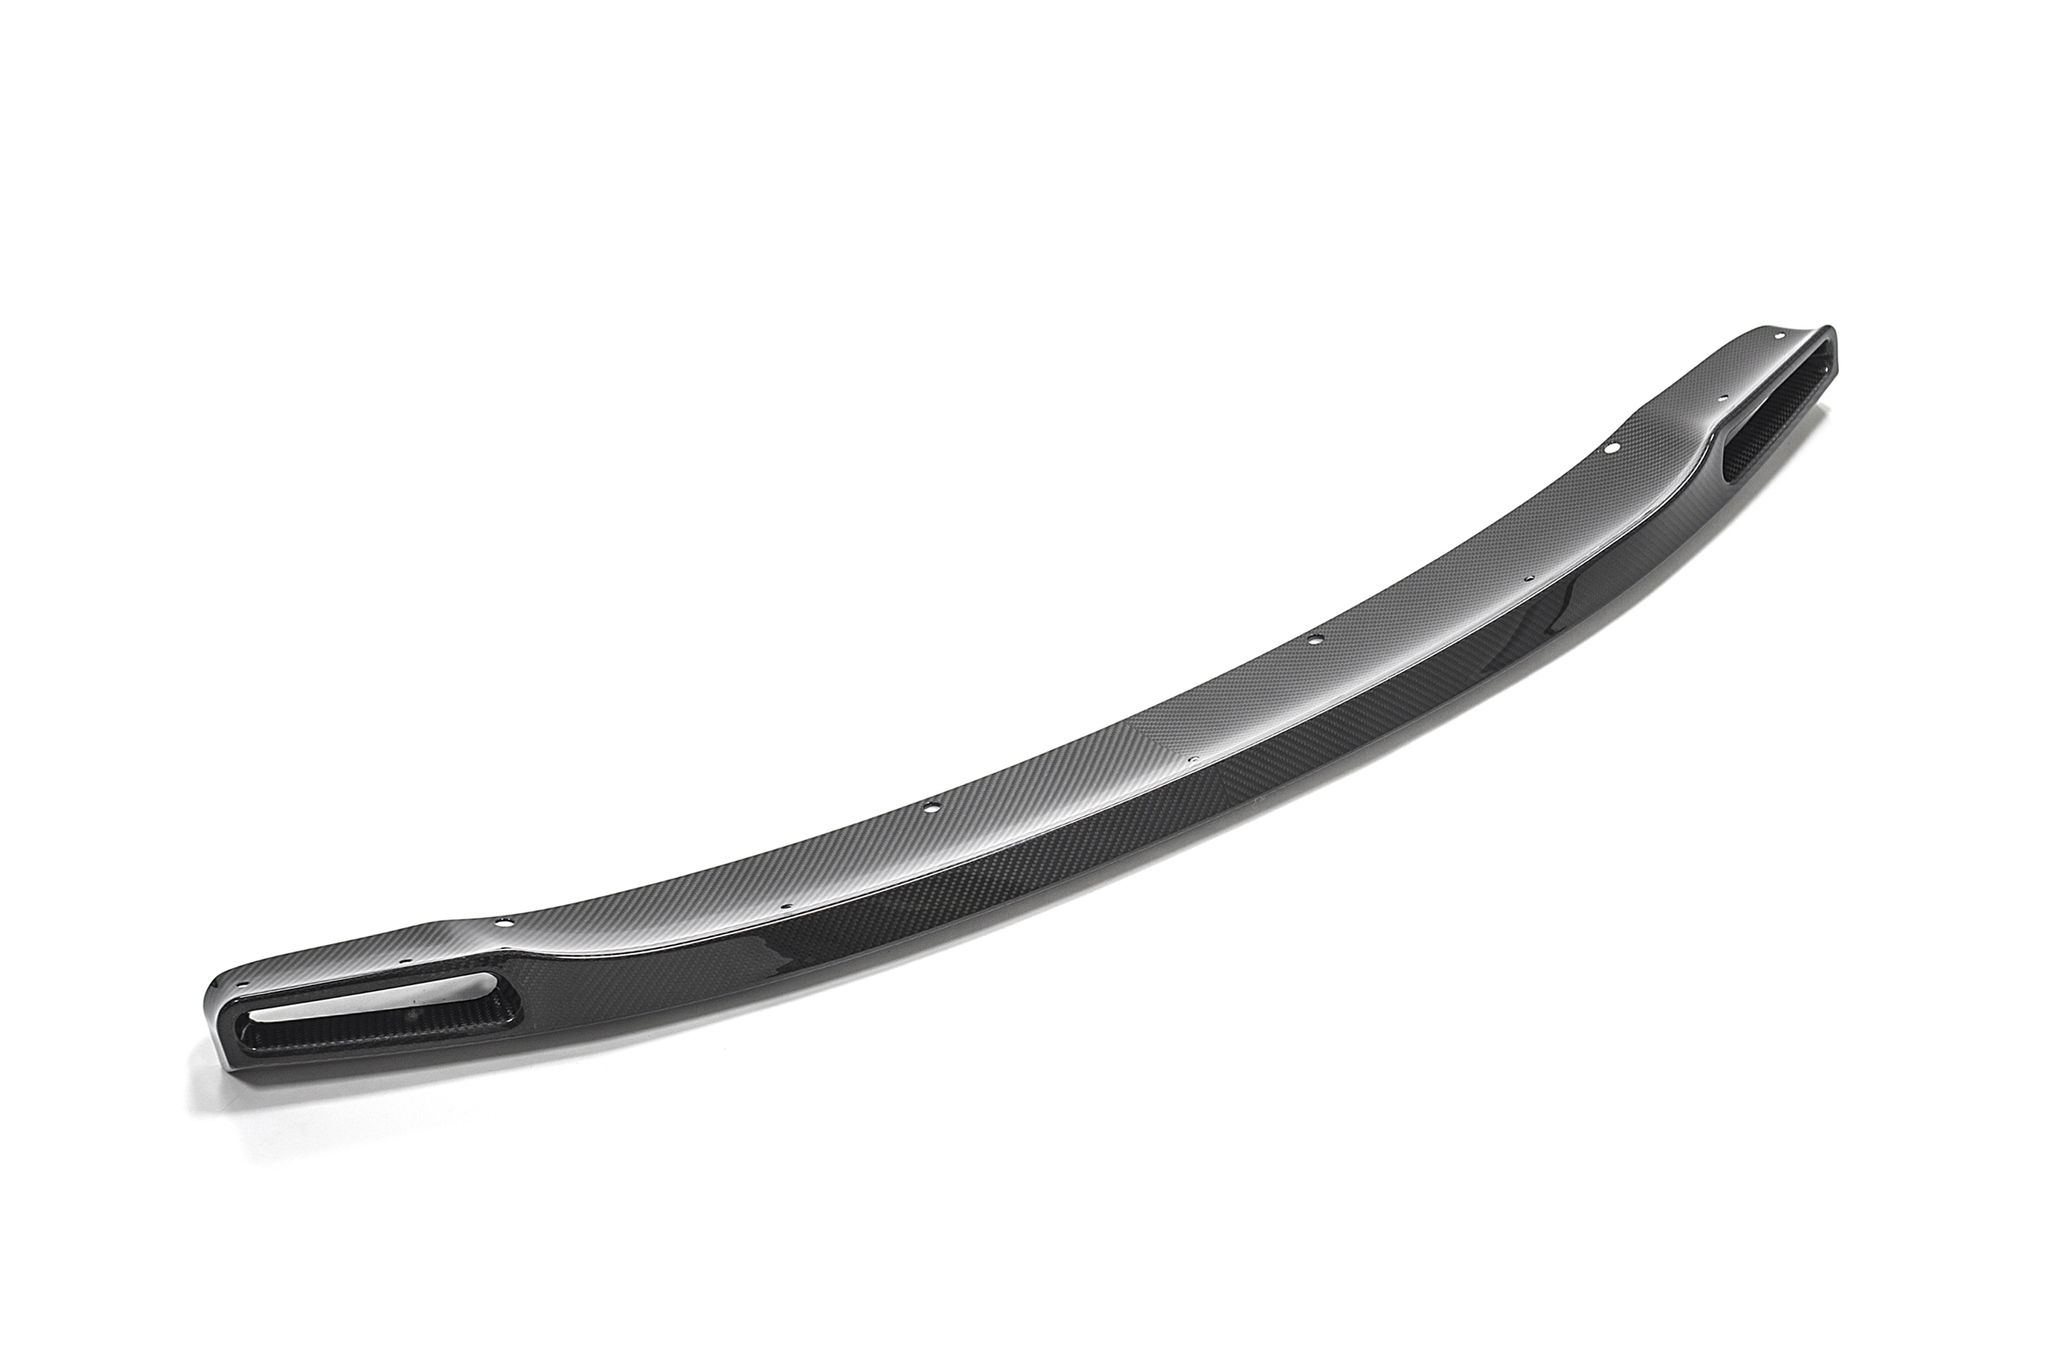 Sterckenn Carbon Fiber front lip for BMW M5 F10 carbon